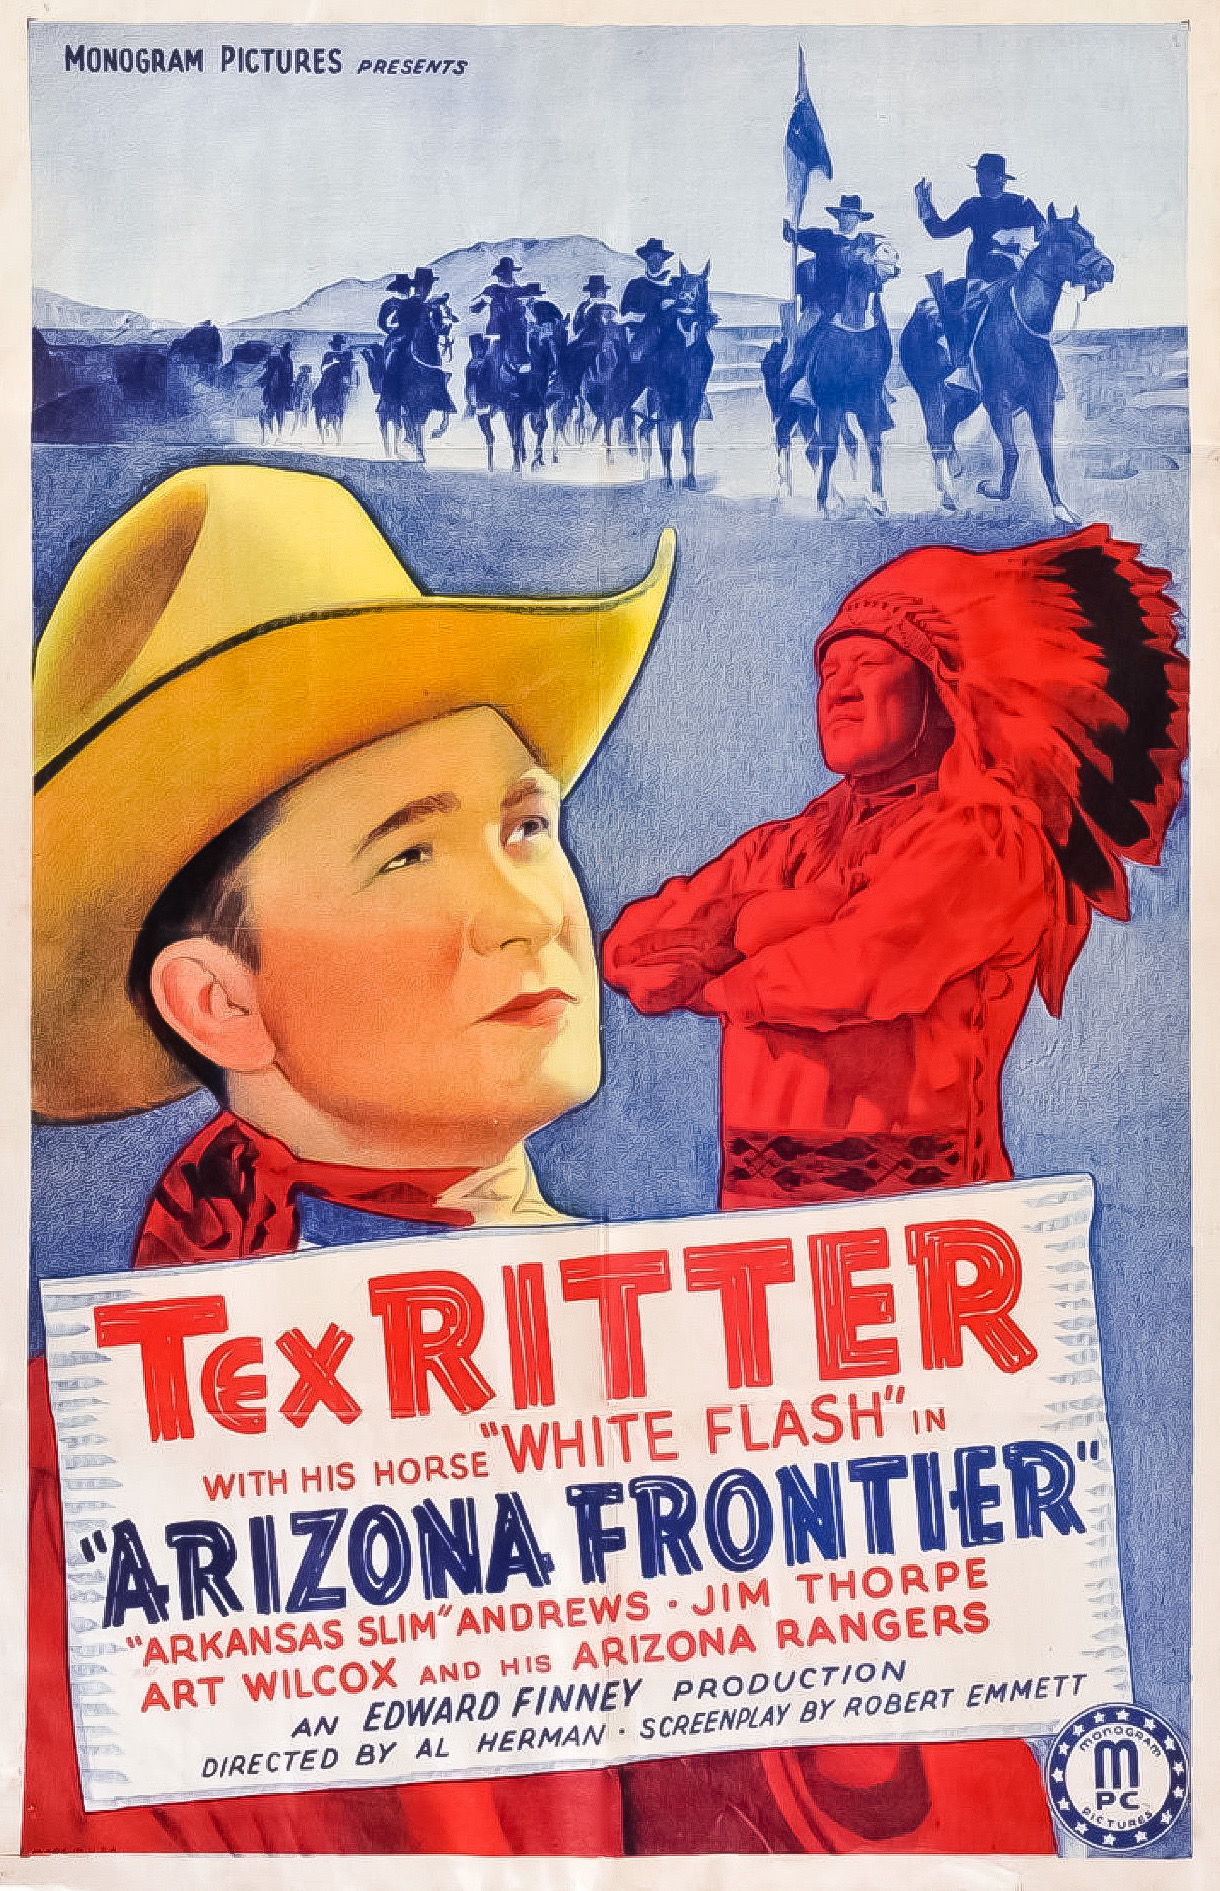 Arizona Frontier